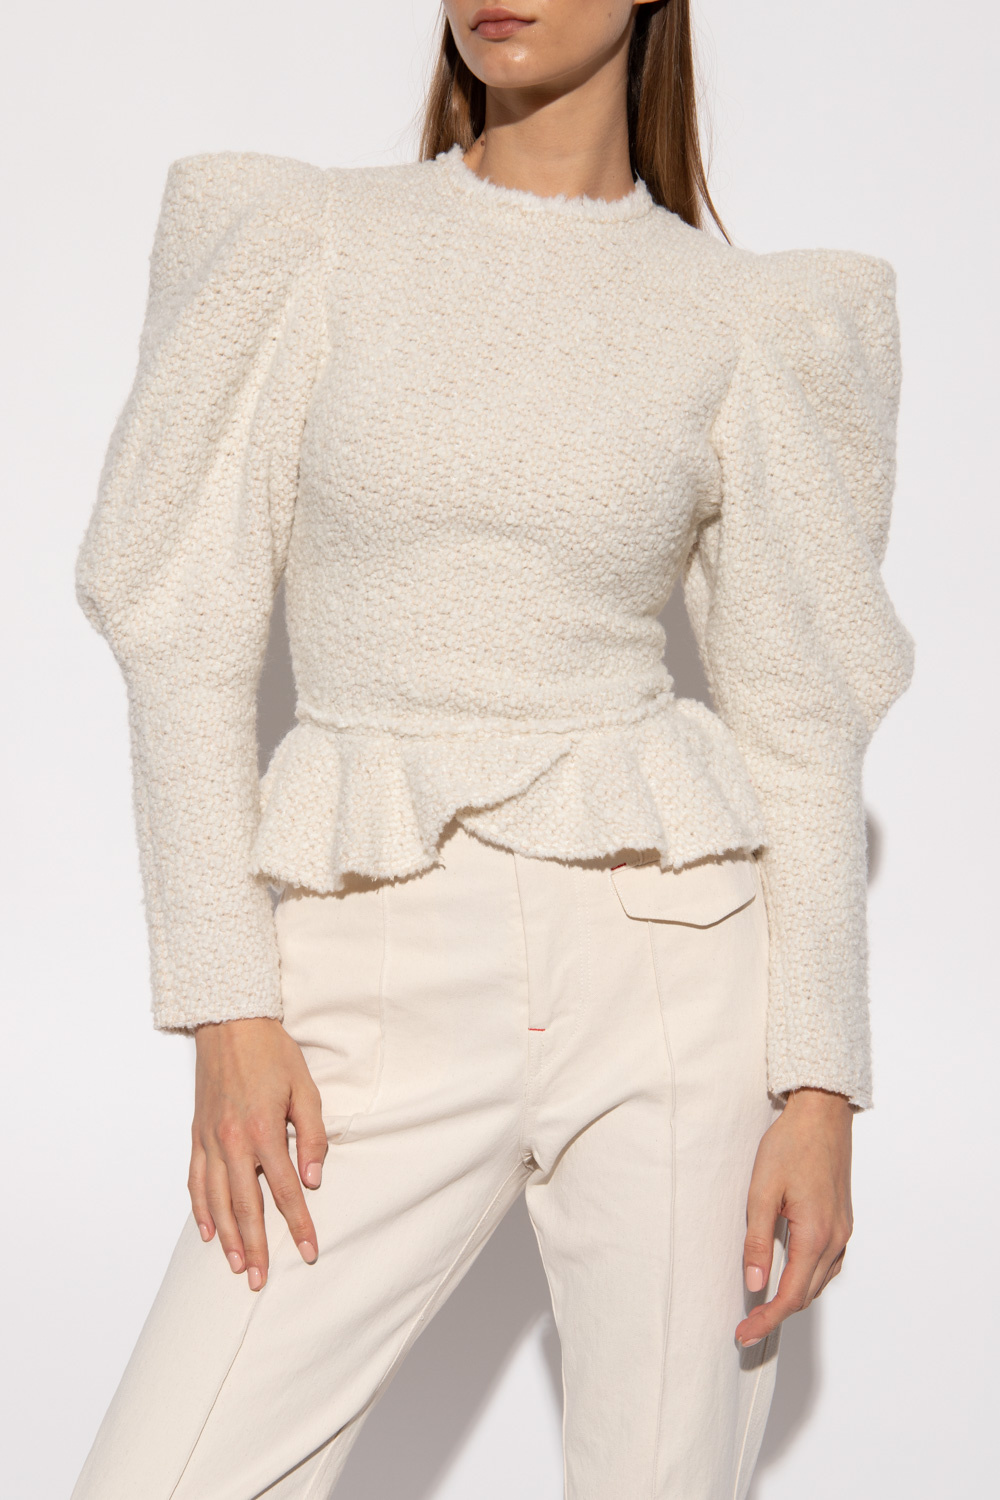 Isabel Marant Ruffled sweater